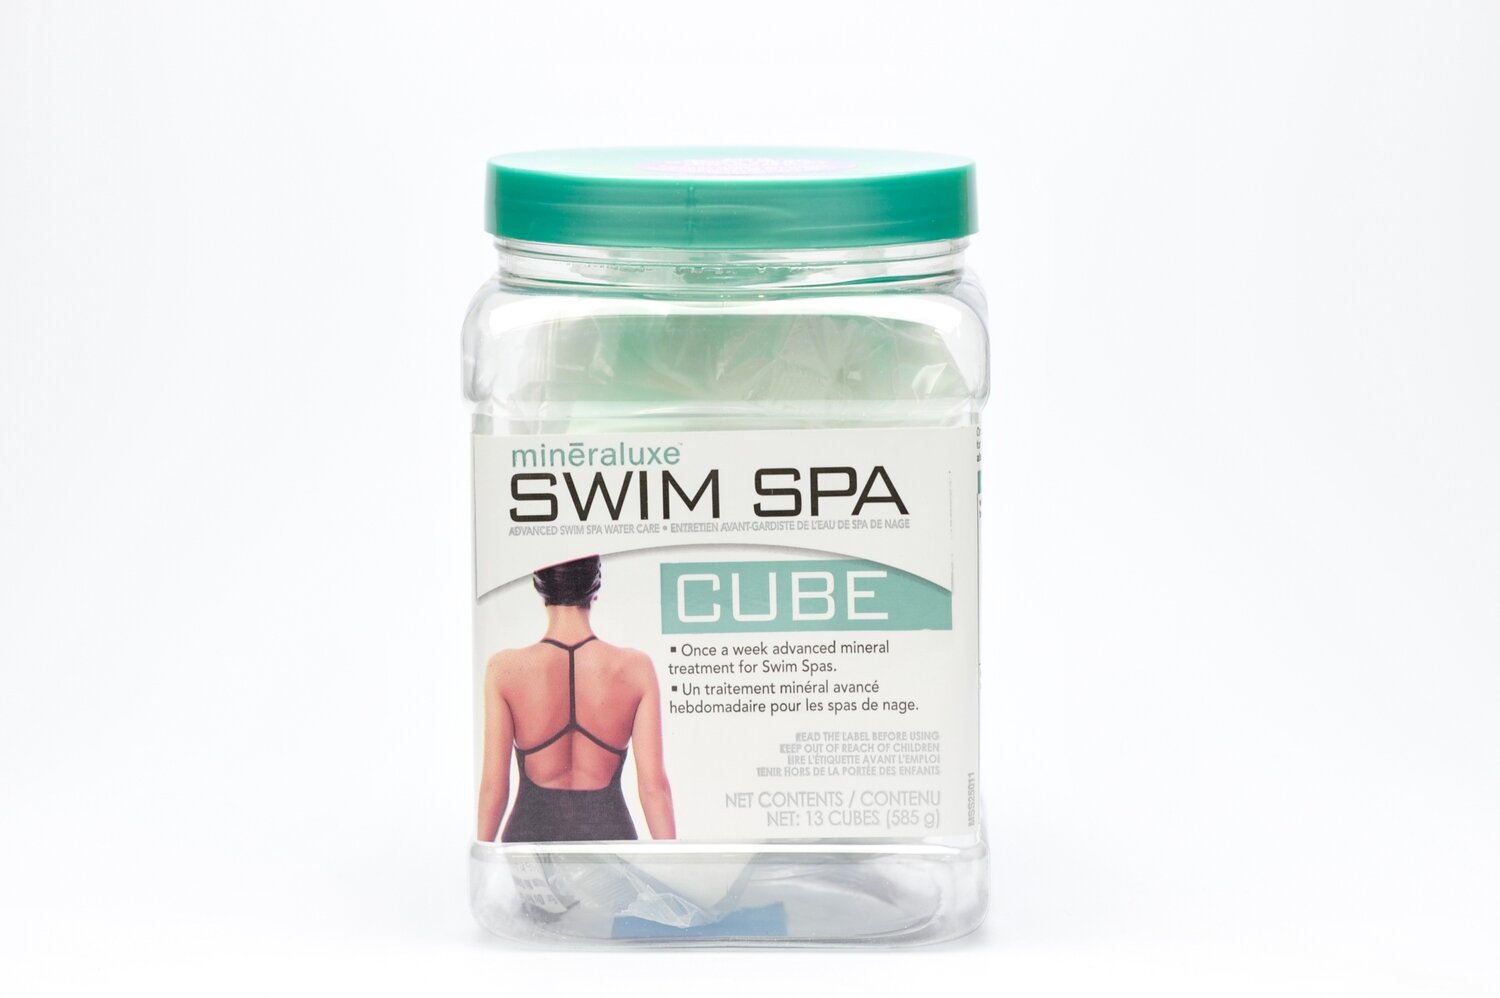 Mineraluxe Swim Spa Cubes (13 - 585g)